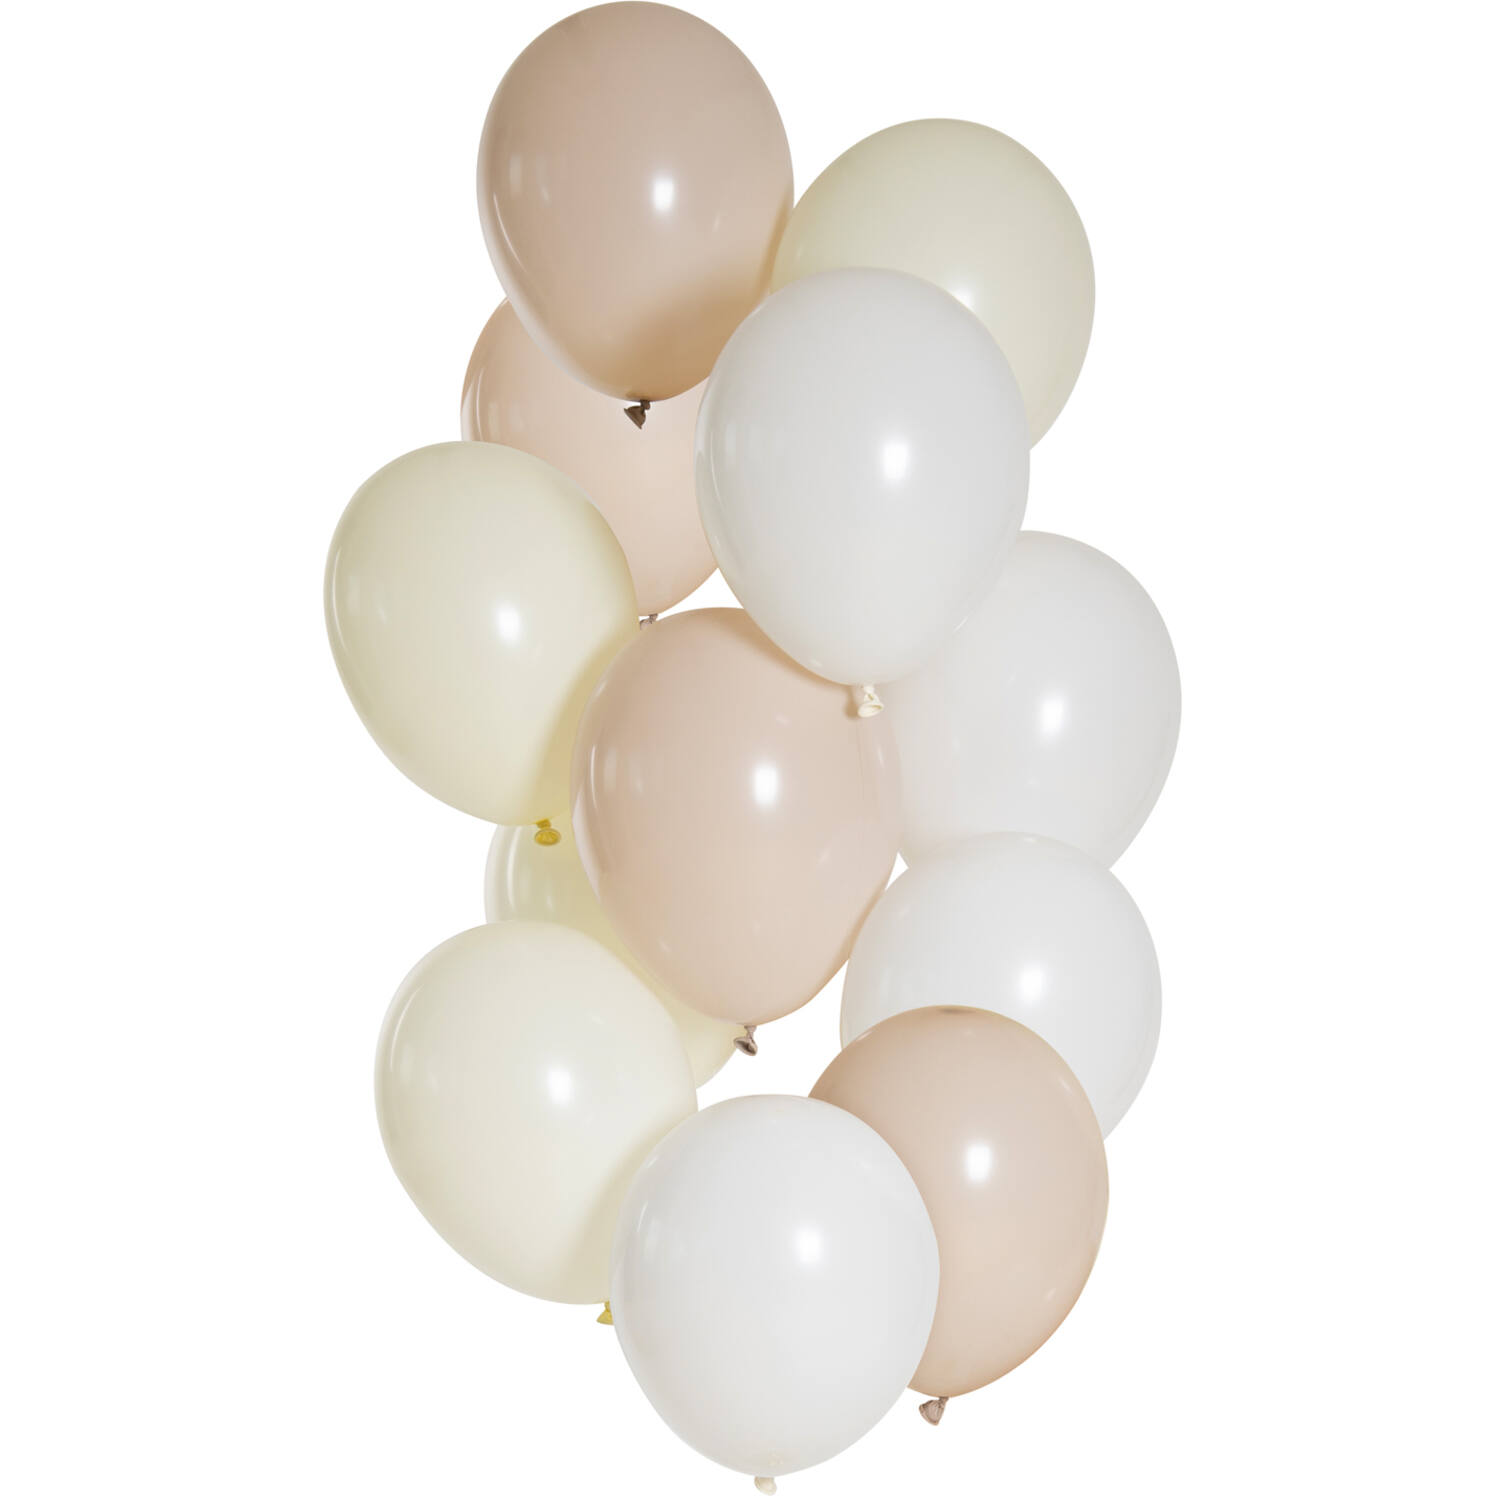 NEU Premium-Latex-Luftballons Gelb-Wei-Peach, 33cm, 12 Stk.